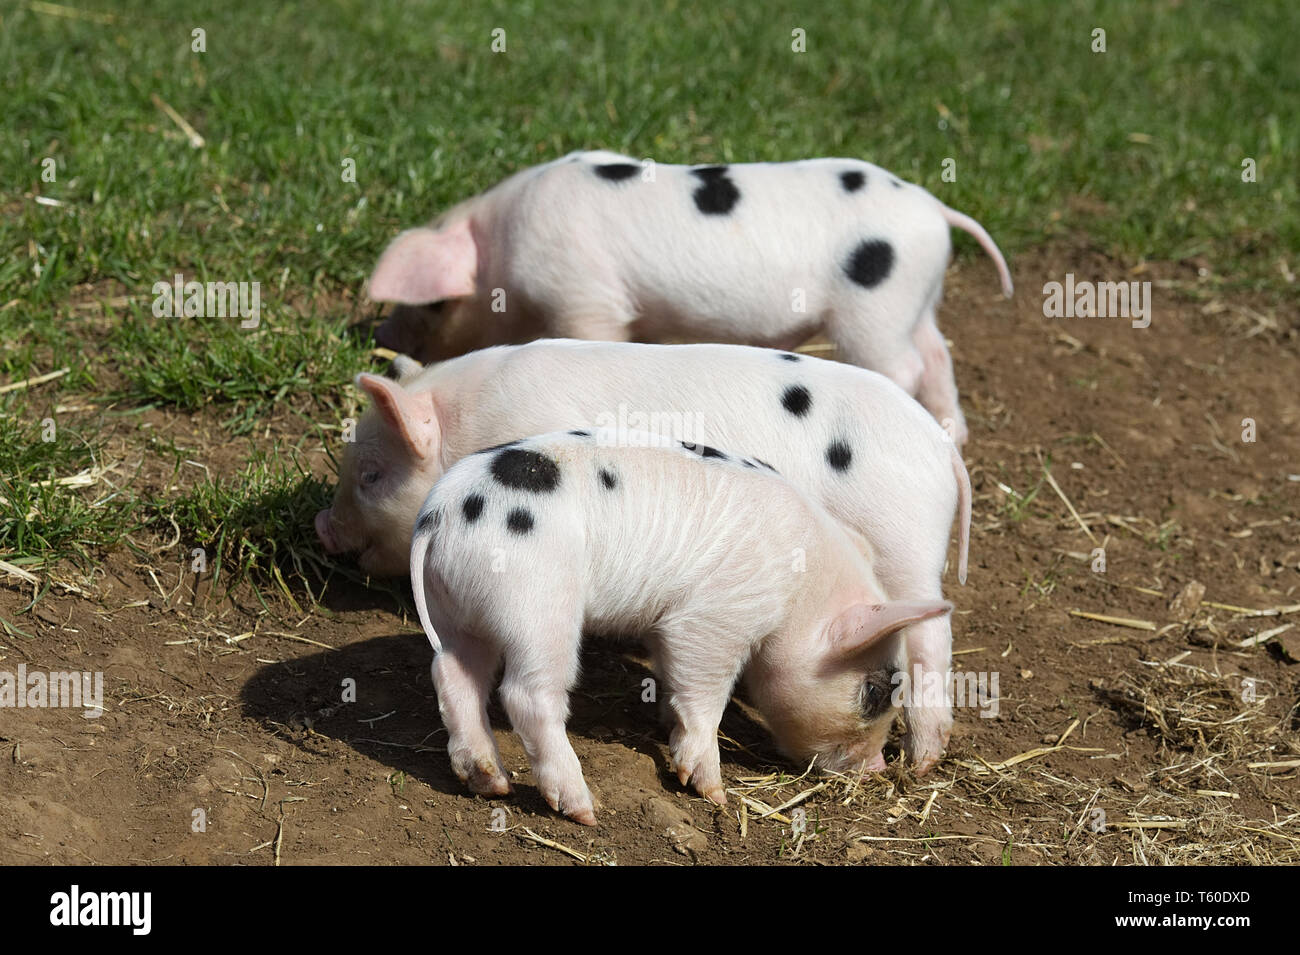 Gloucester old spot piglets, Three little pigs Stock Photo